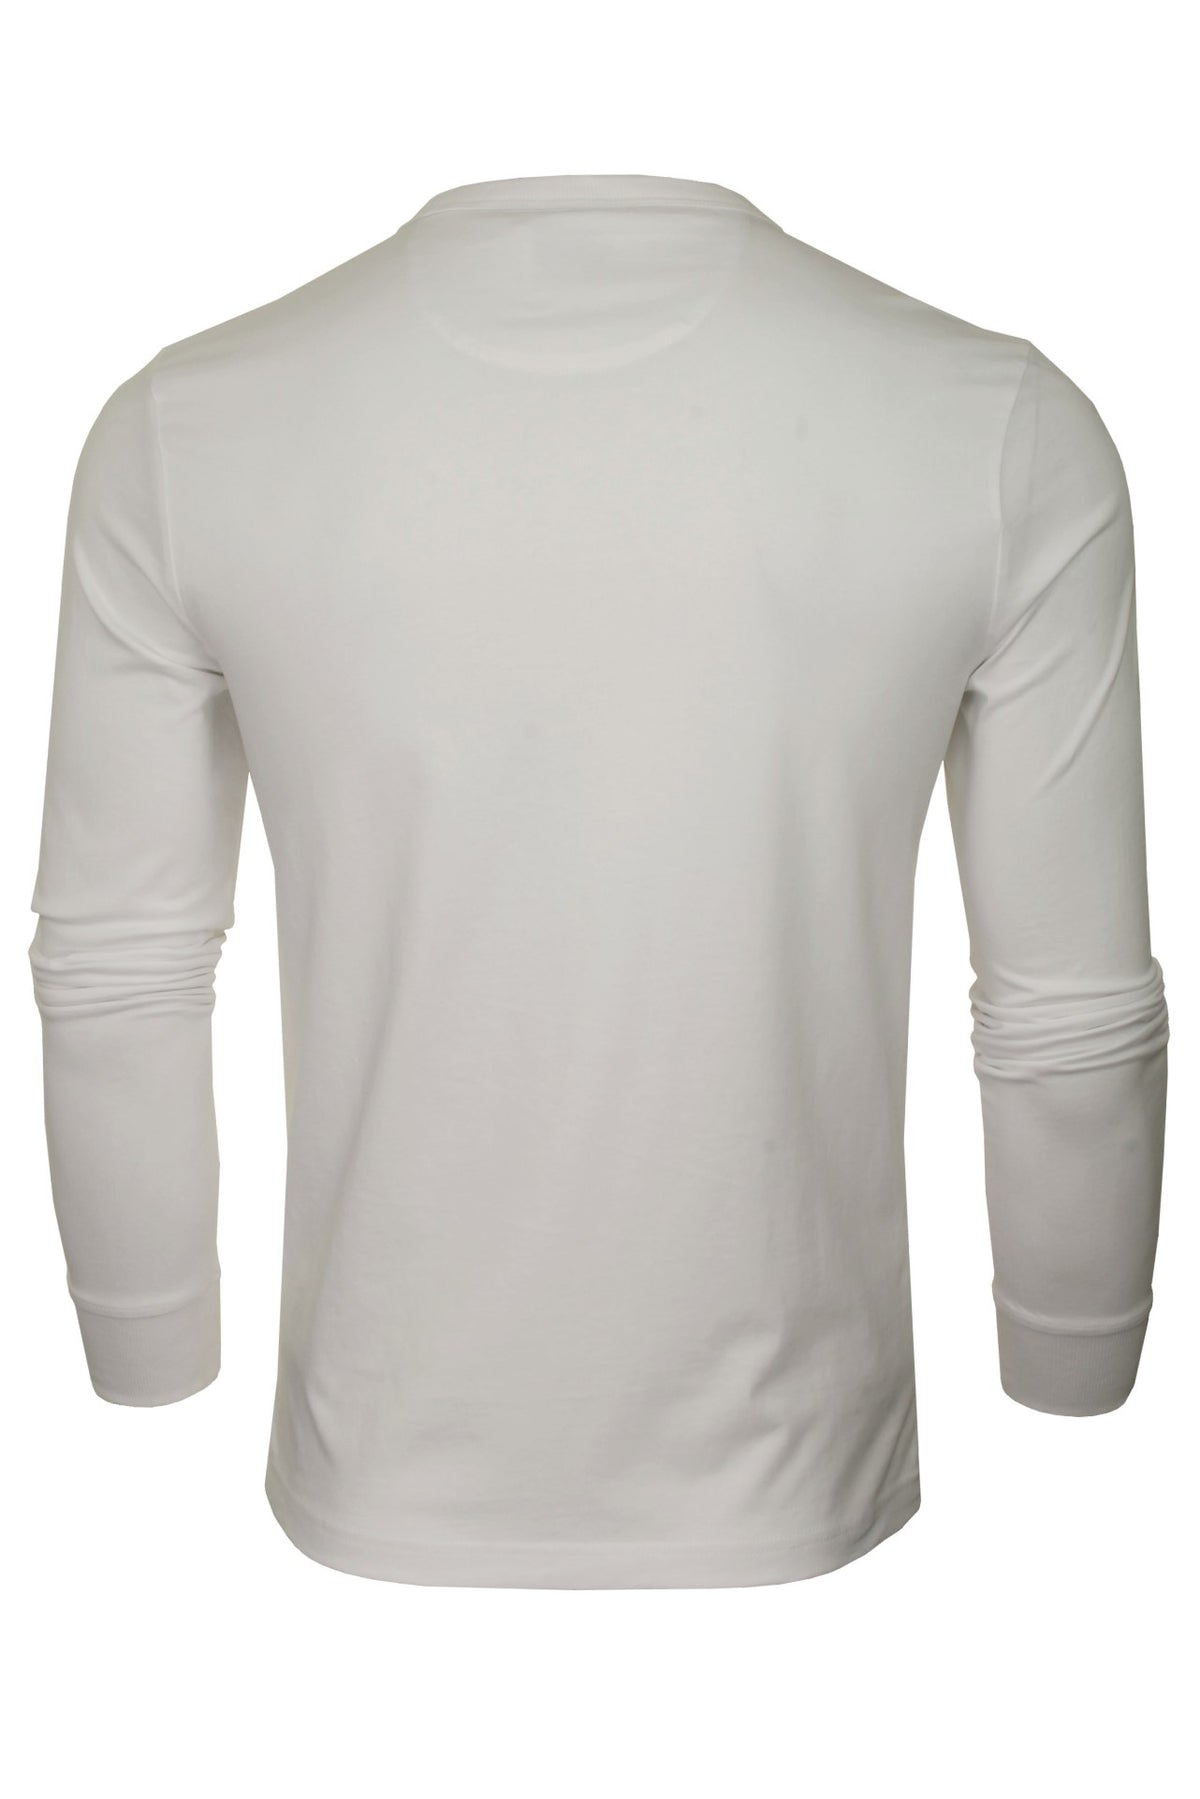 Farah Mens 'Worthington' Long Sleeved T-Shirt, 03, F4Ksb057, White